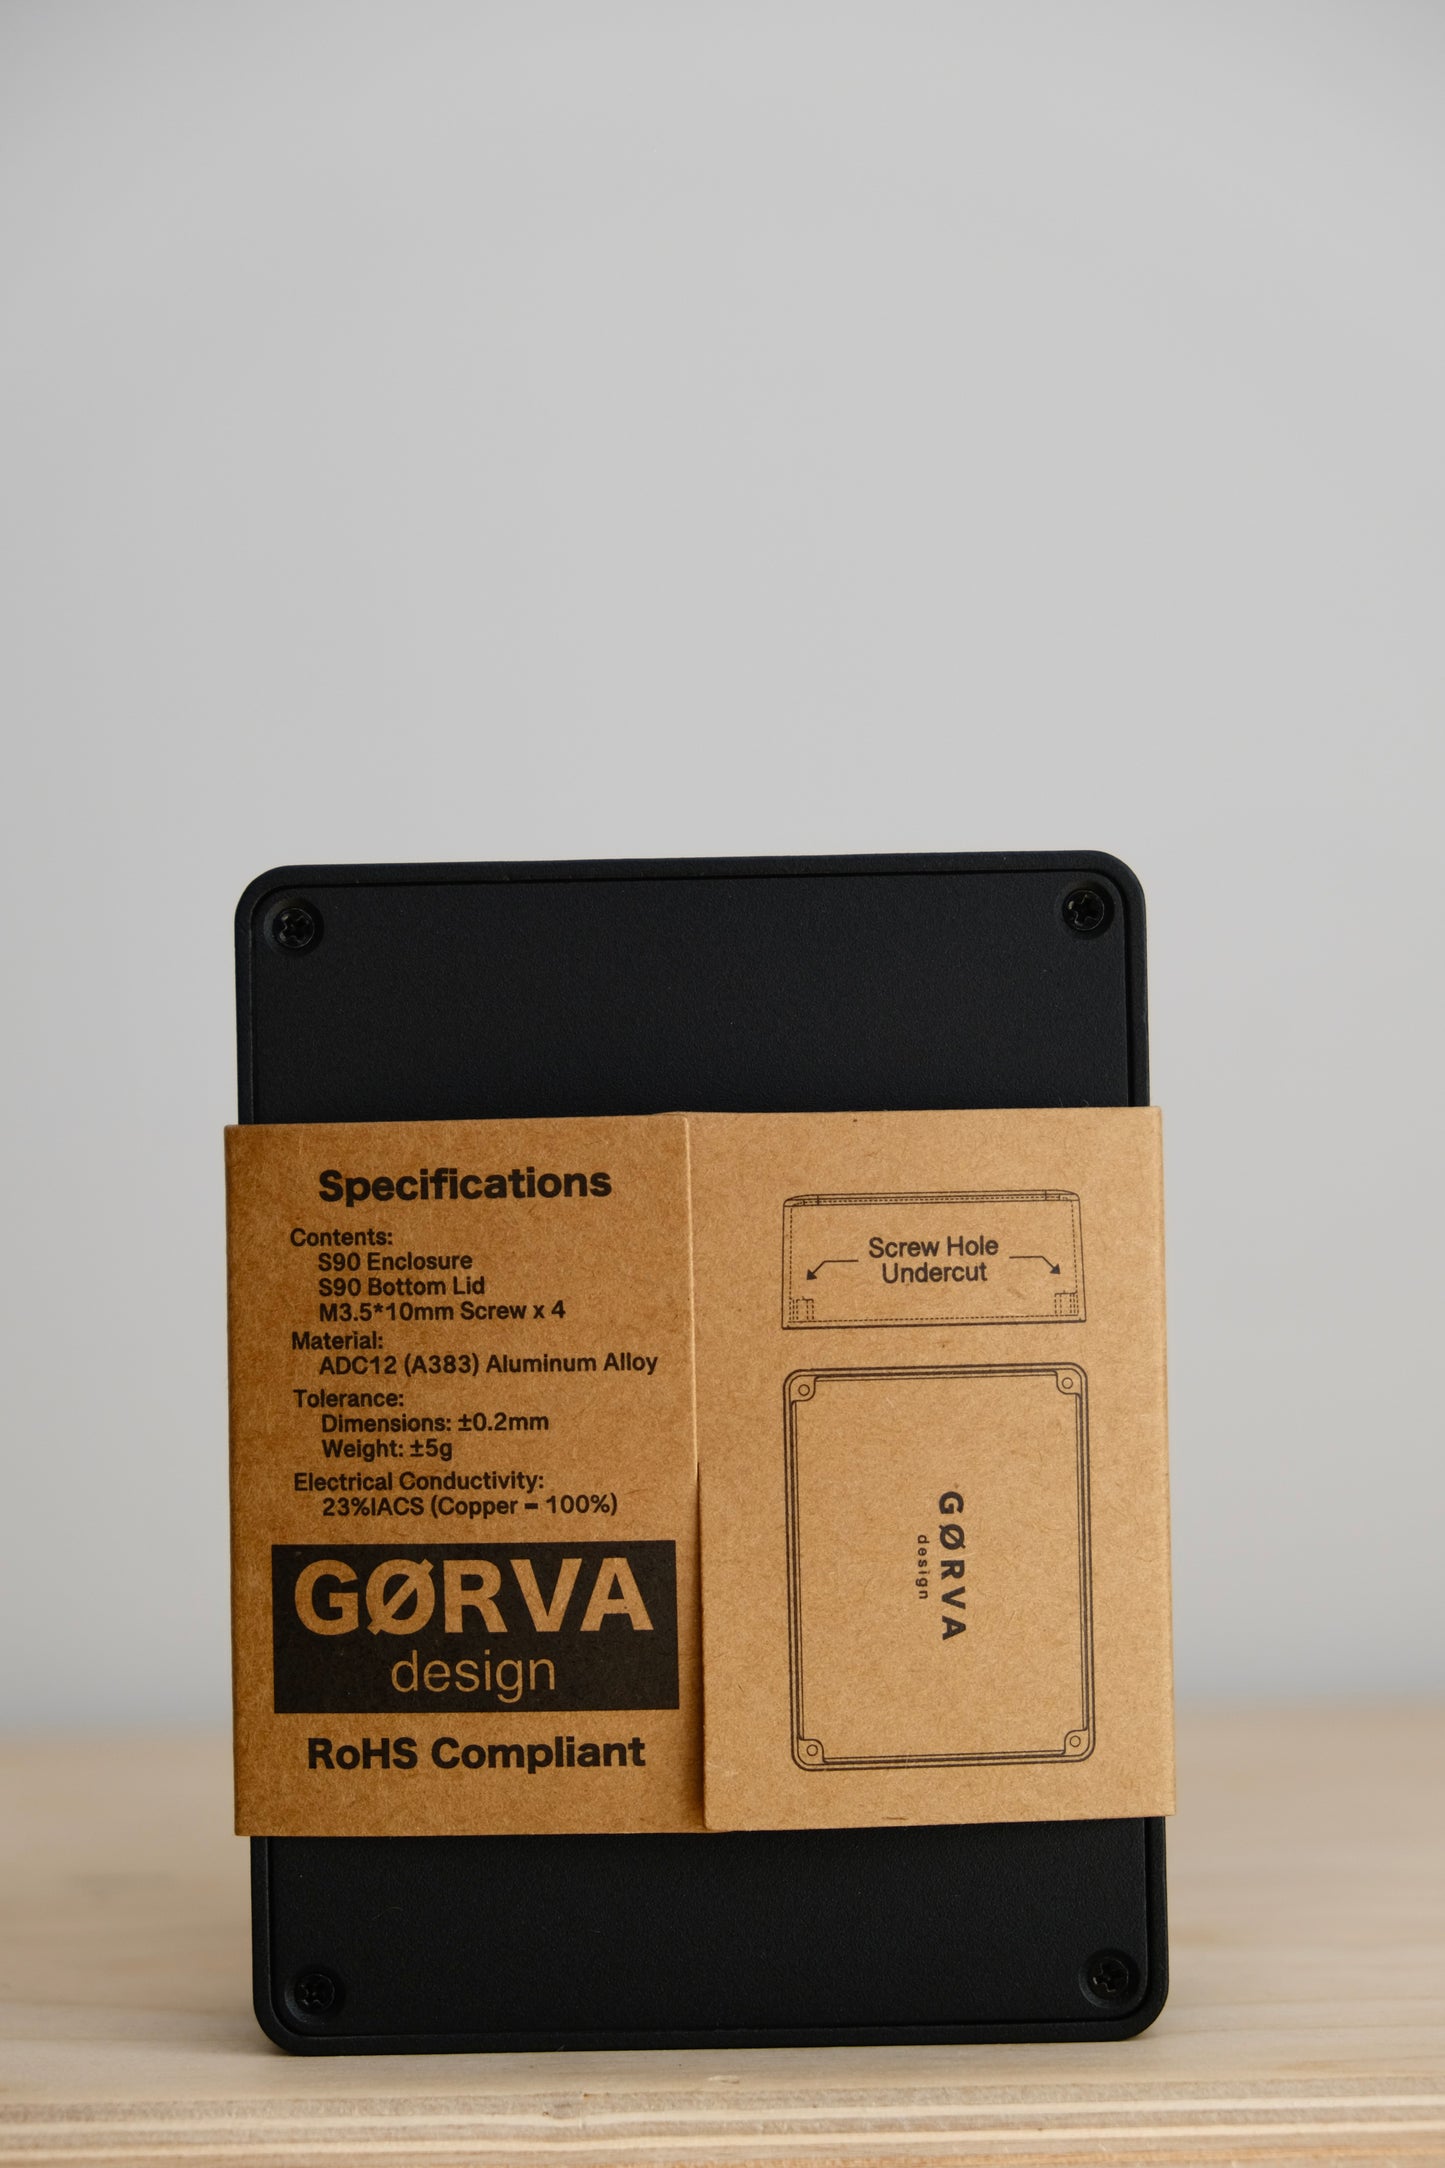 GØRVA Design S90 mkII Enclosure Black